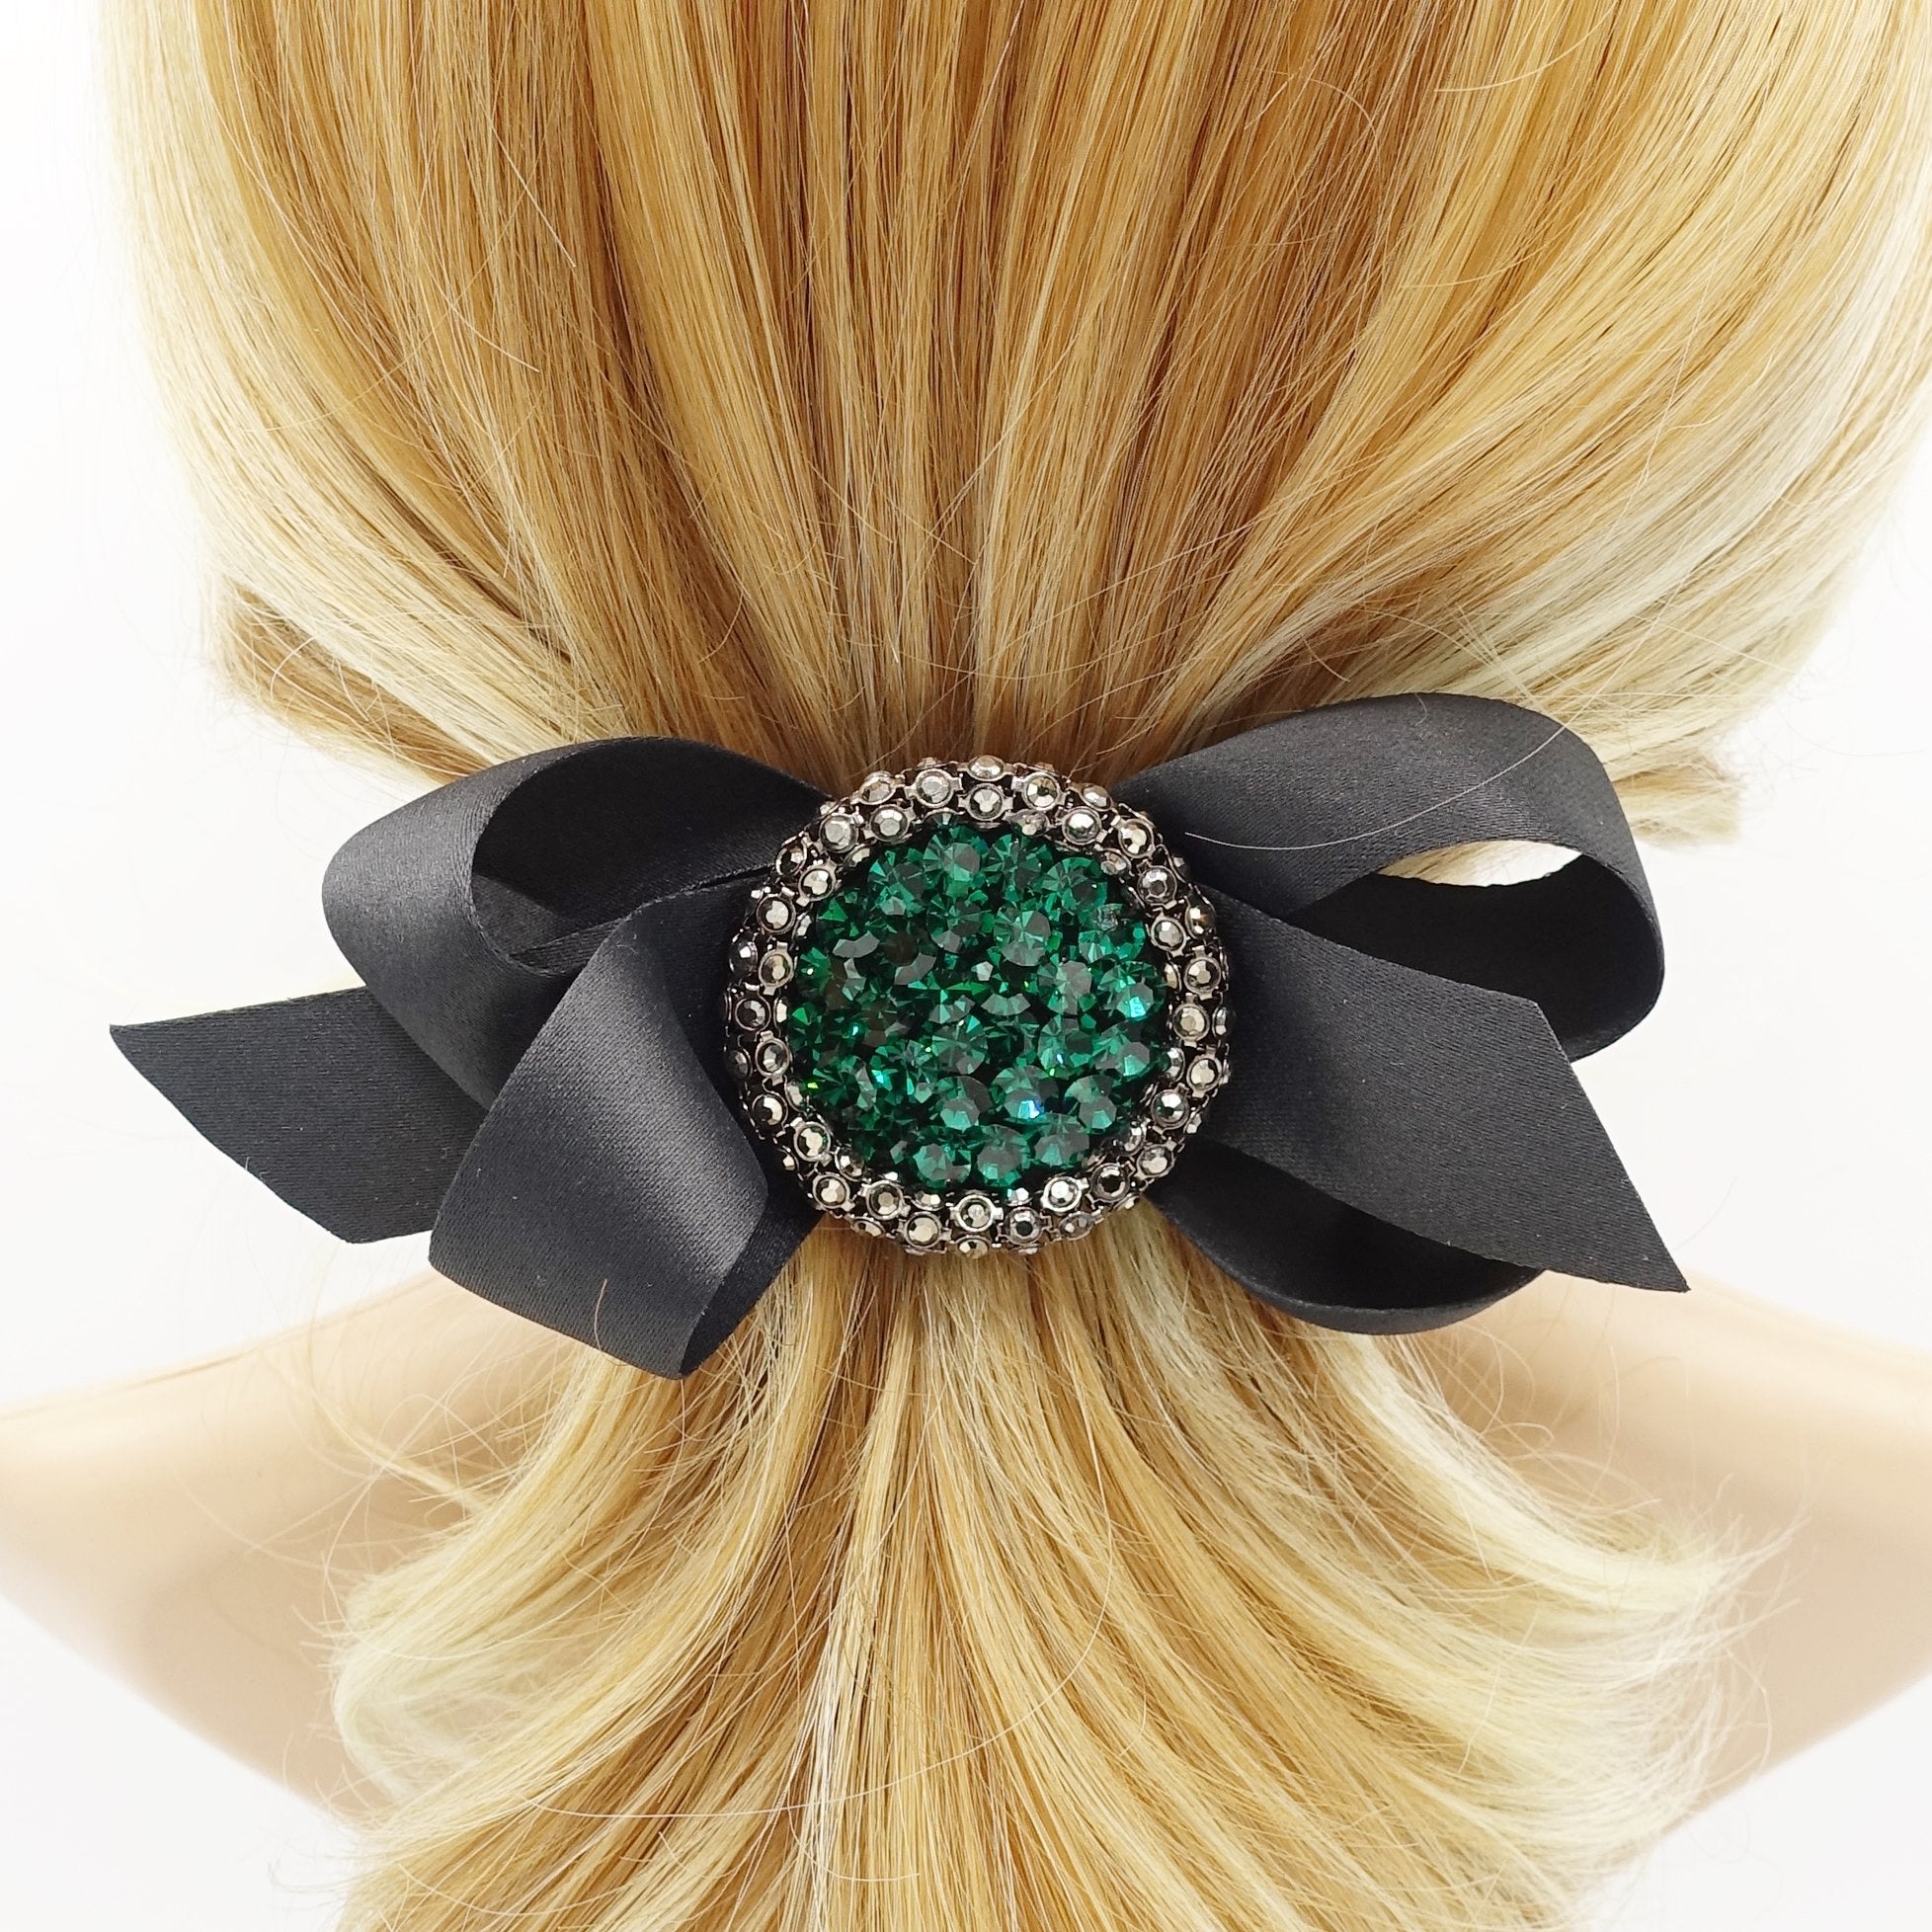 veryshine.com claw/banana/barrette Emerald color jewel buckle bow french barrette rhinestone embellished hair bow women hair accessory